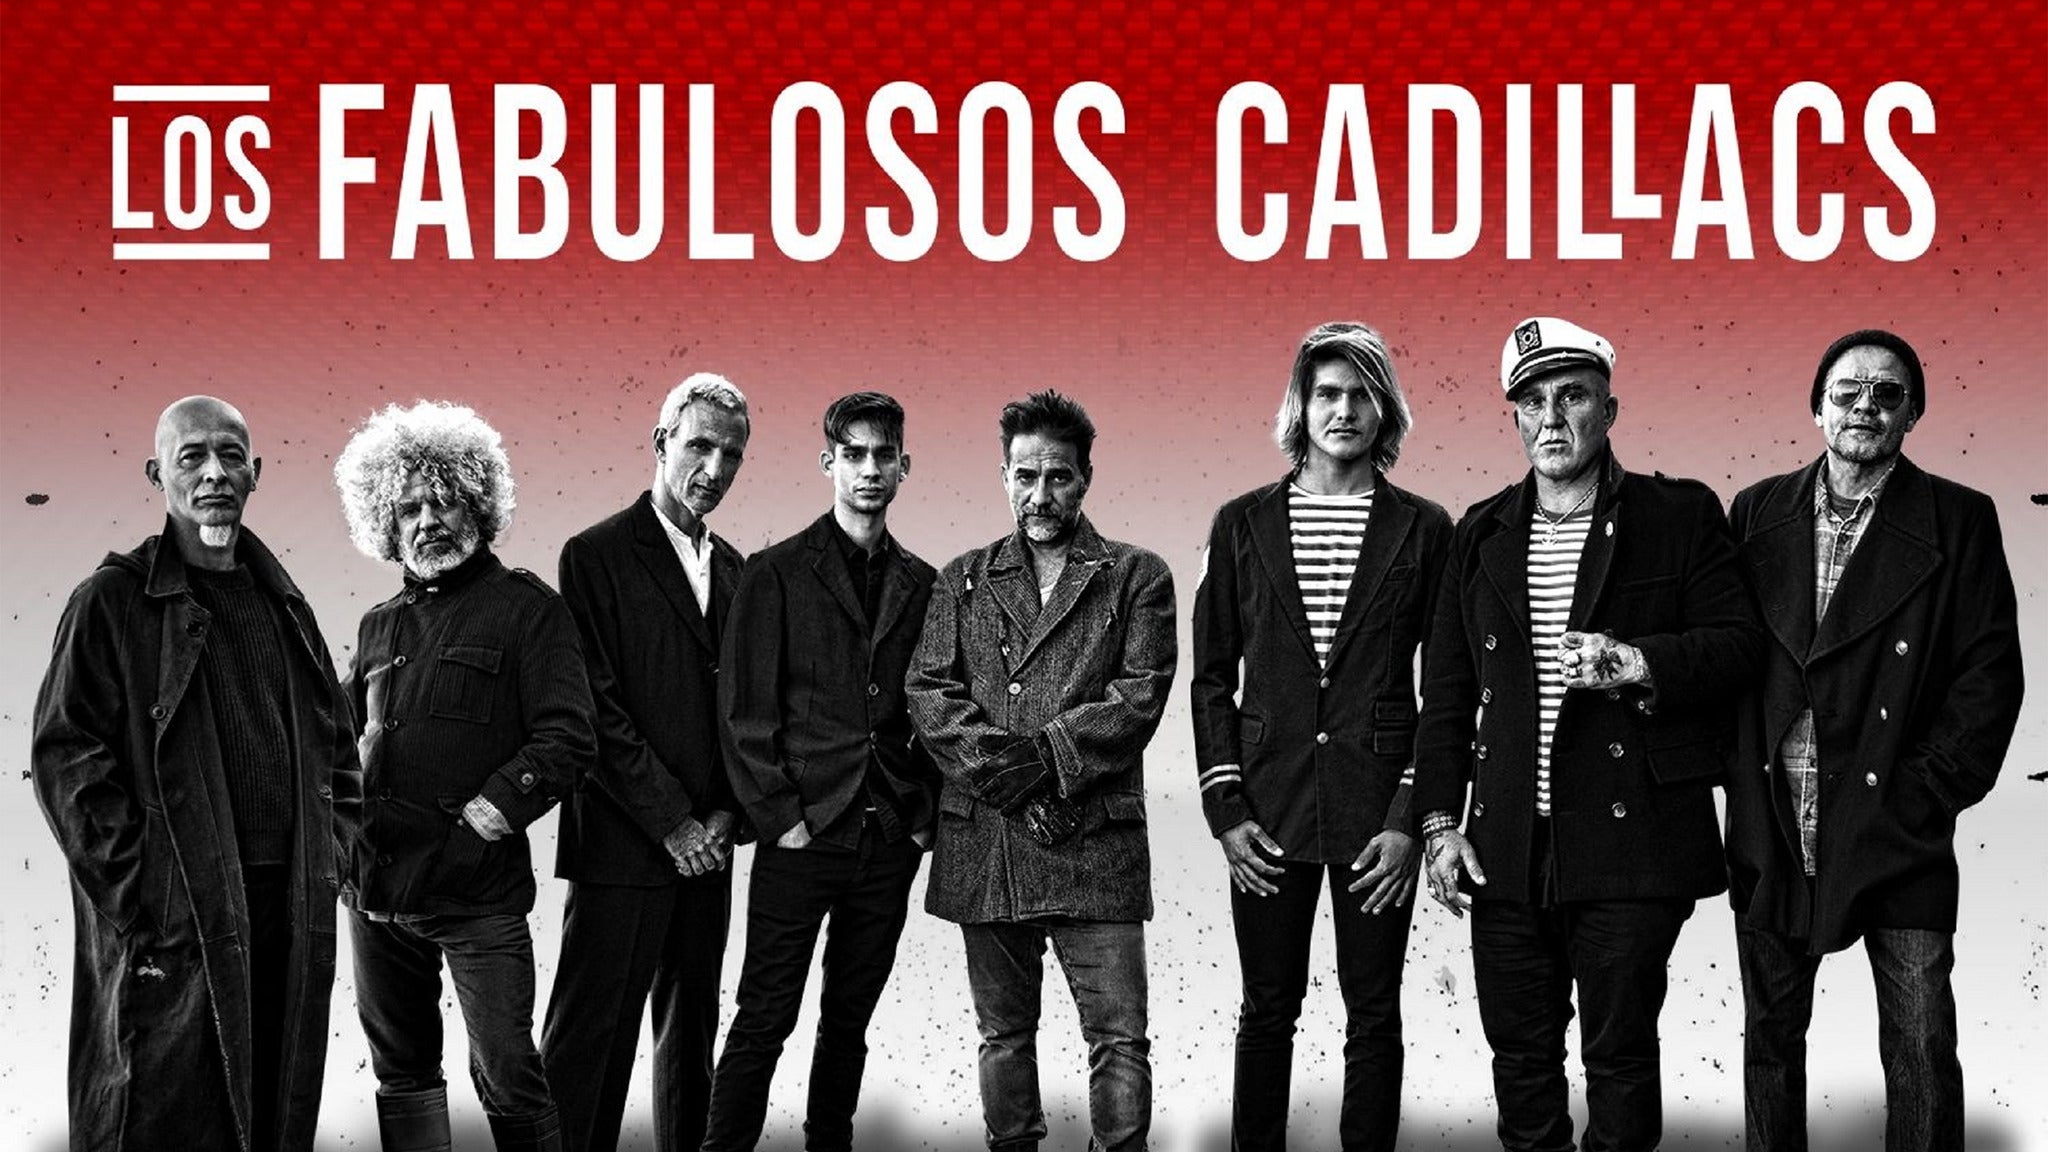 Los Fabulosos Cadillacs in Zapopan promo photo for Gran venta HSBC presale offer code